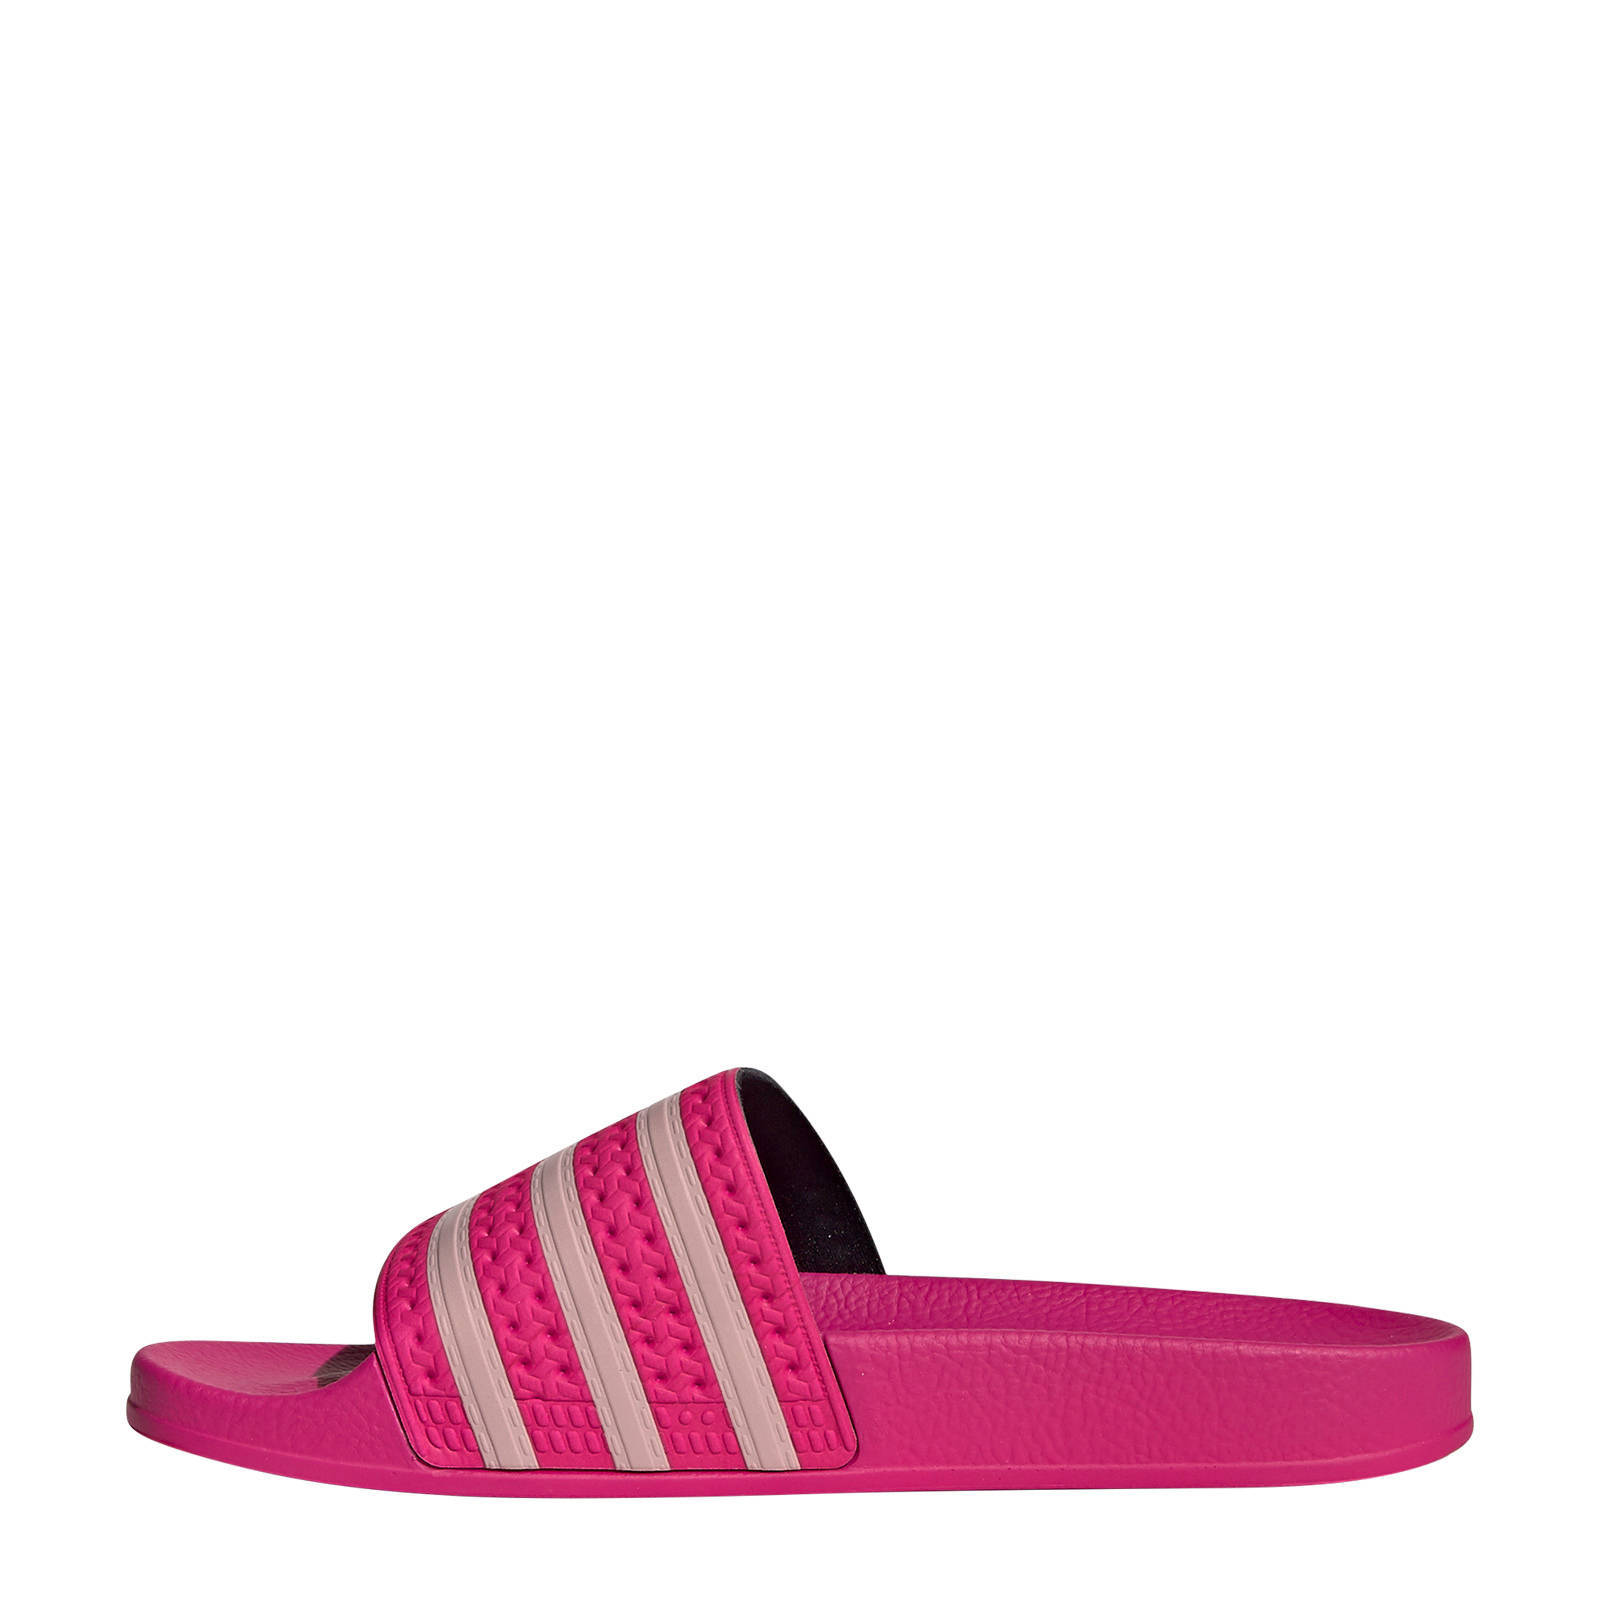 adidas slippers roze zwart, OFF 77%,Cheap price !